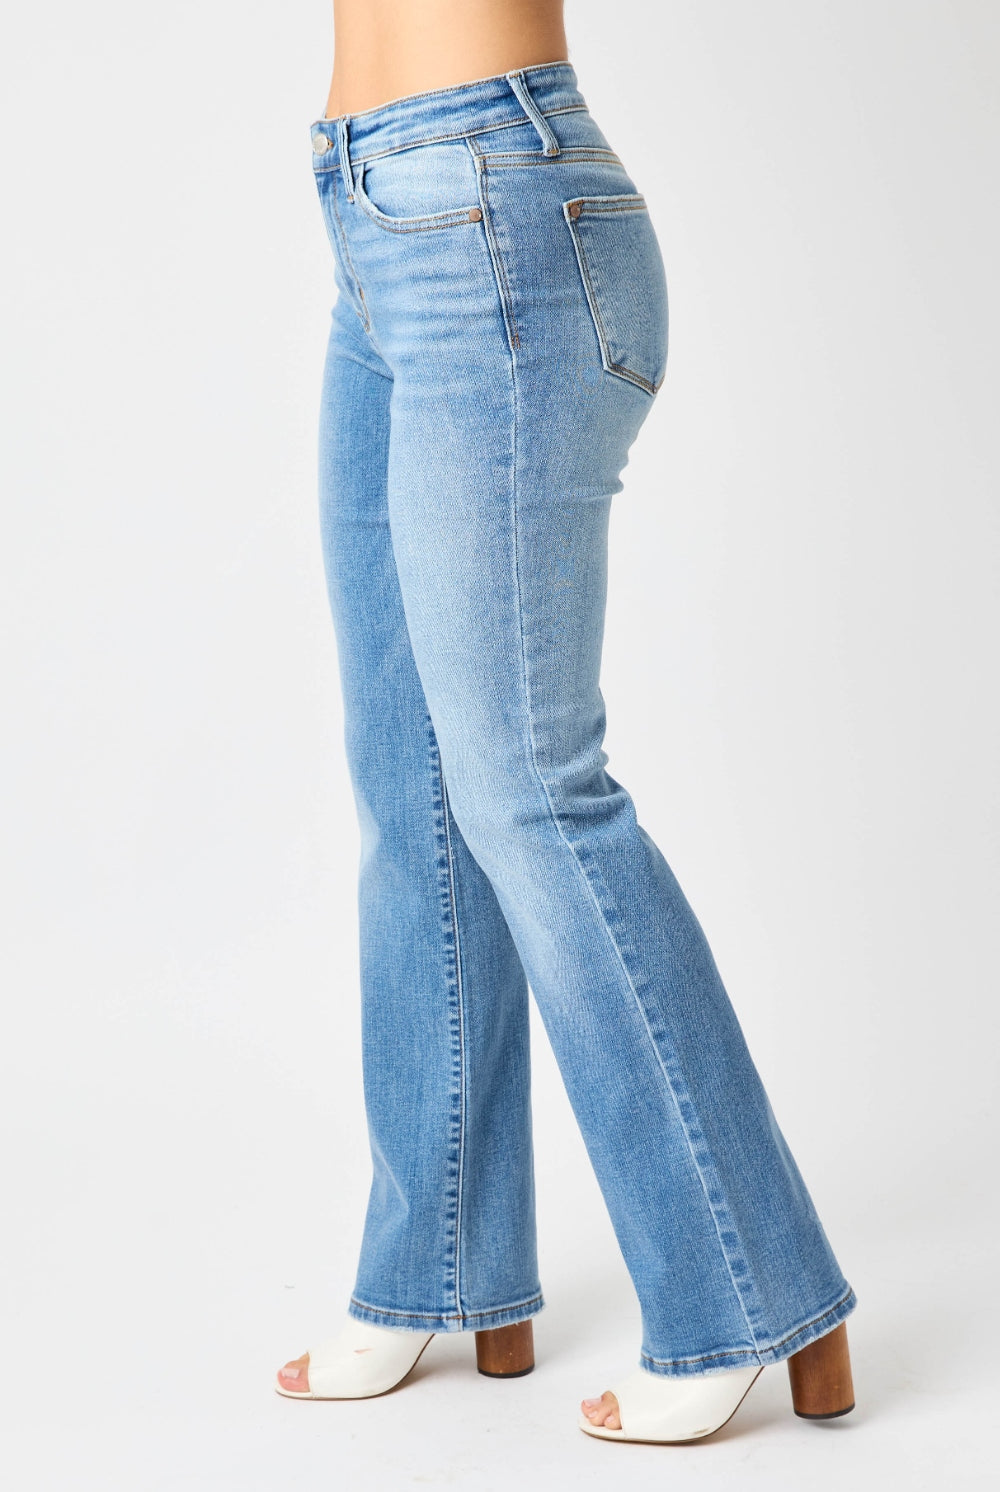 Judy Blue Full Size High Waist Straight Jeans-Krush Kandy, Women's Online Fashion Boutique Located in Phoenix, Arizona (Scottsdale Area)